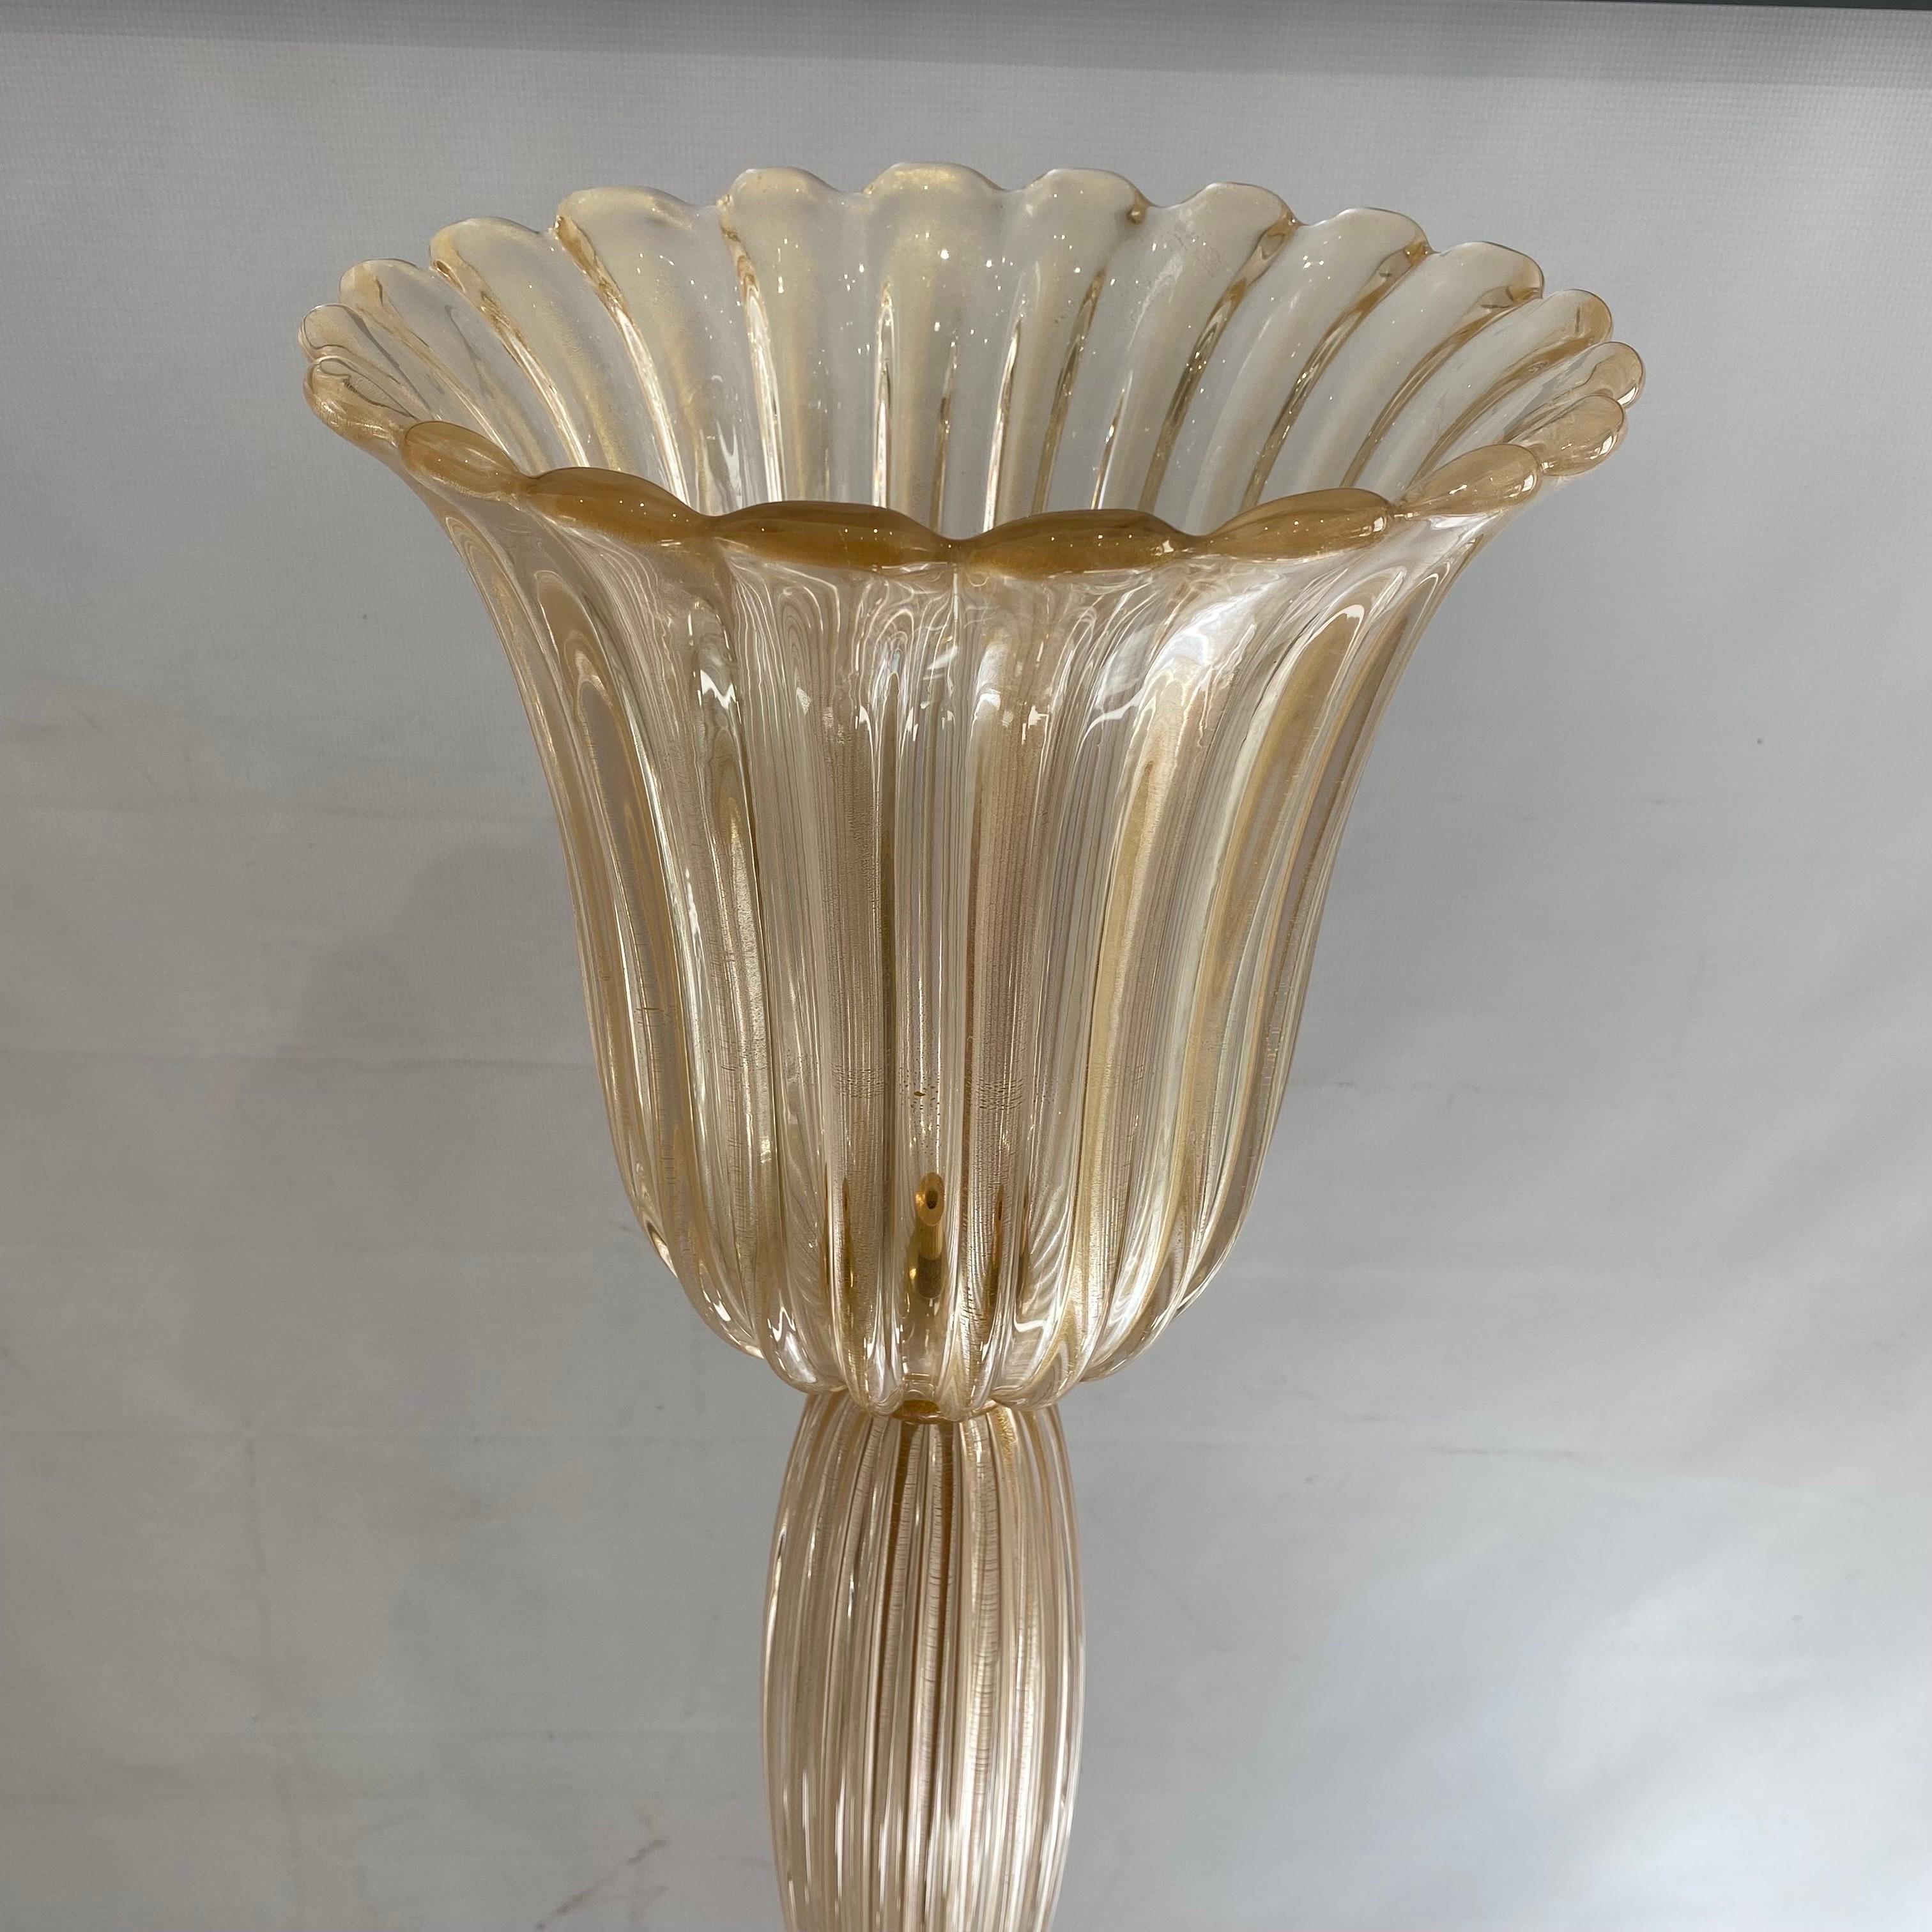 Signed Archimede Seguso Murano Glass Floor Lamp Gold Italian Art Deco 1980s For Sale 1